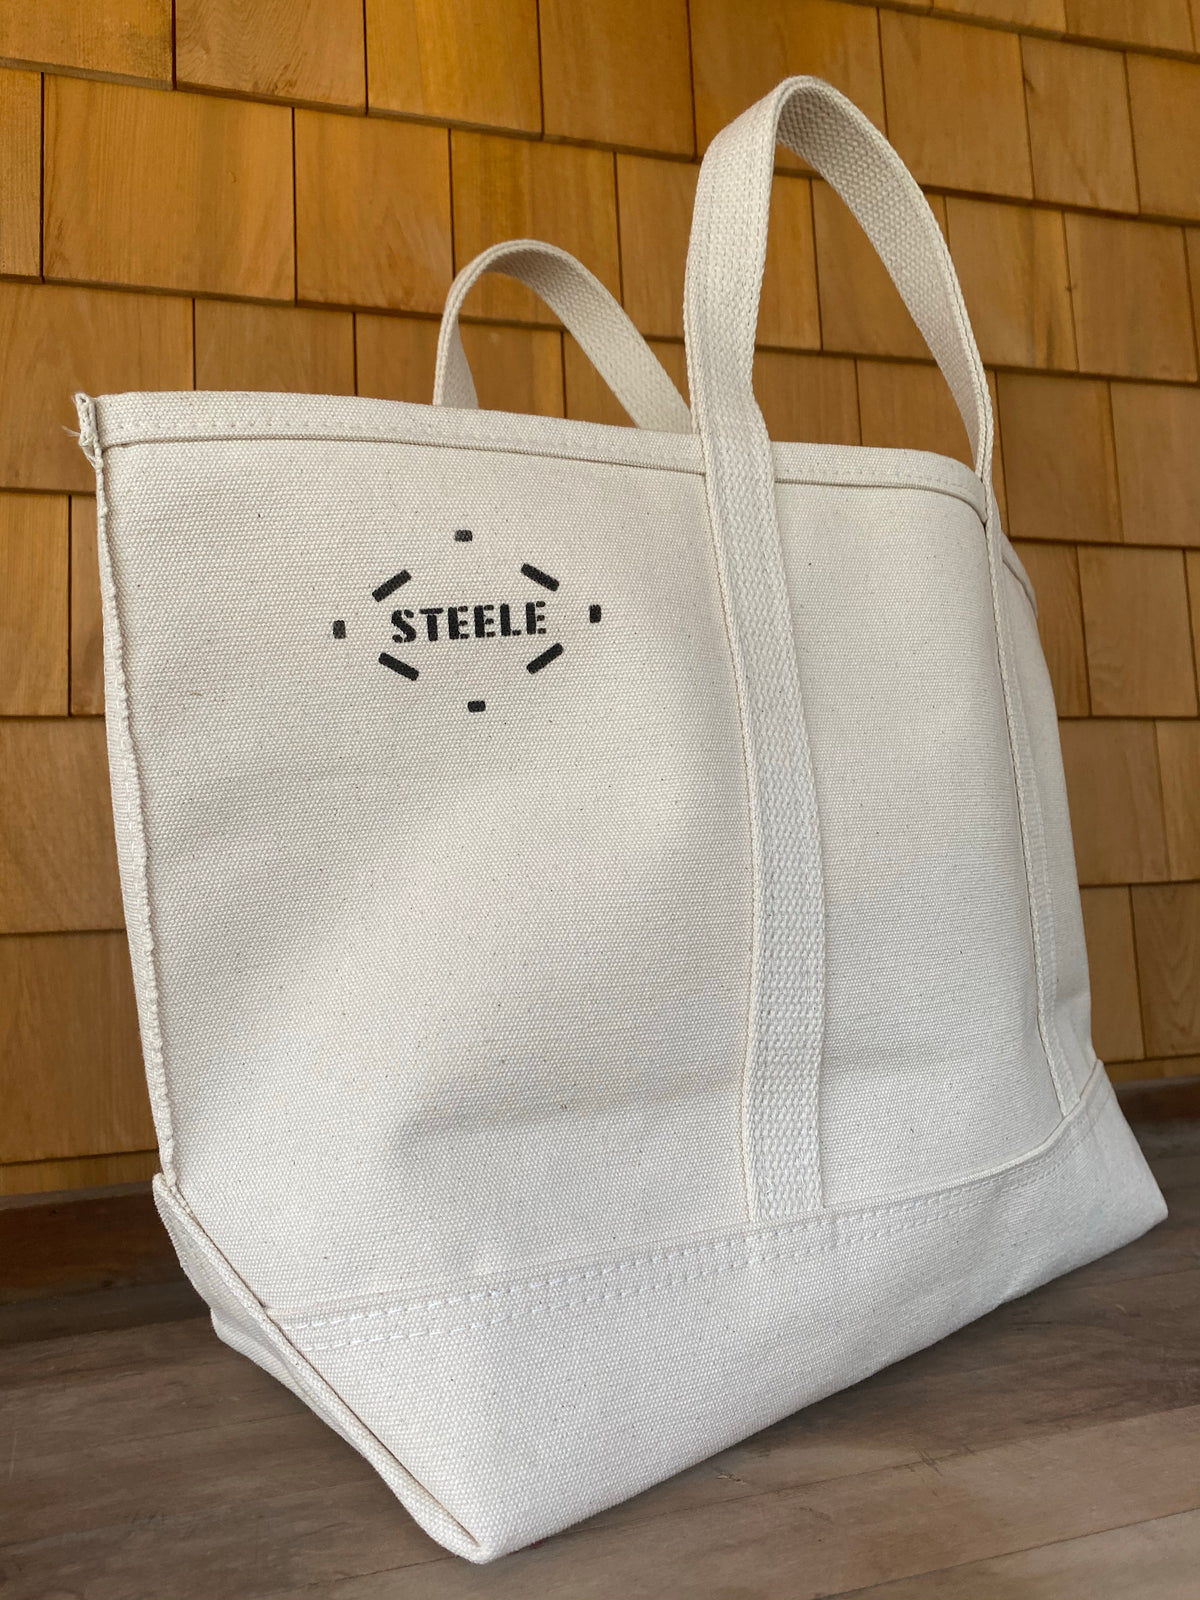 Steele Canvas Tote Bag: Small